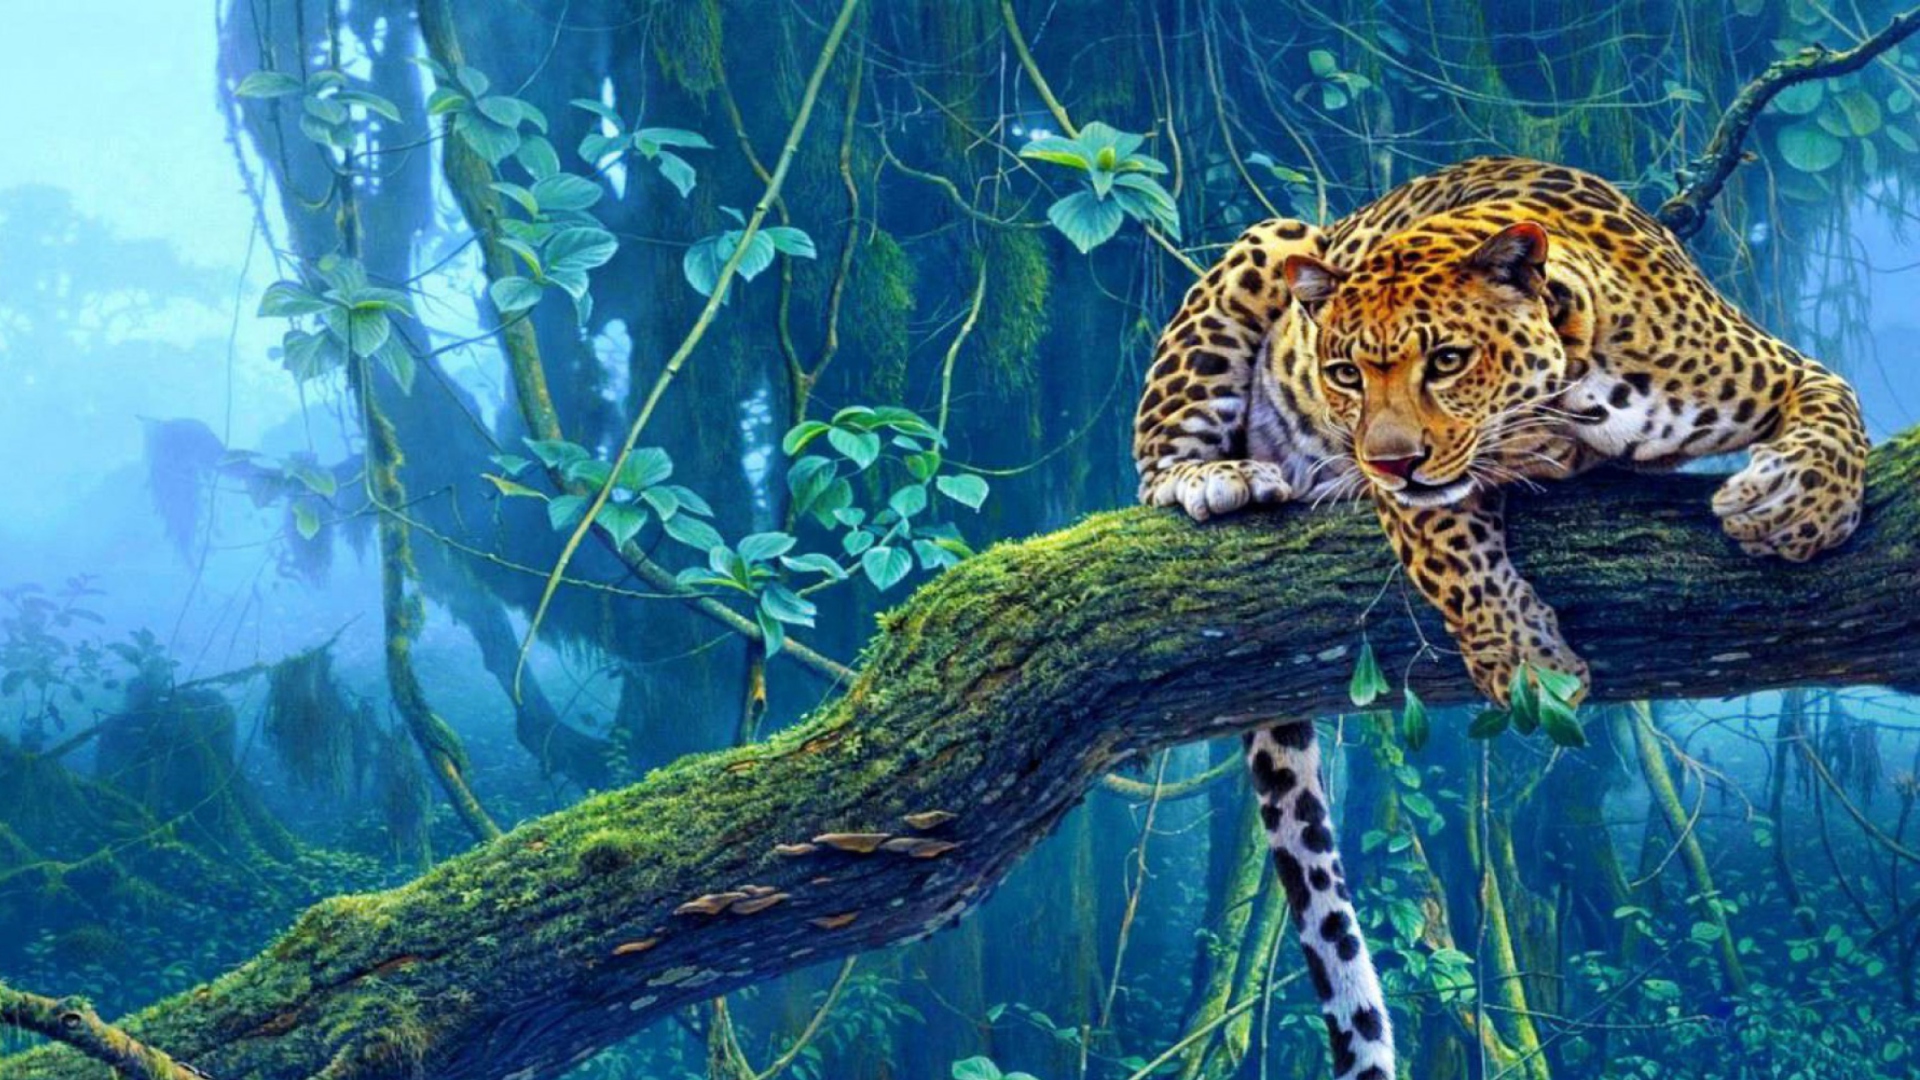 Jungle Tiger Painting Wallpaper for Desktop 1920x1080 Full HD 1920x1080